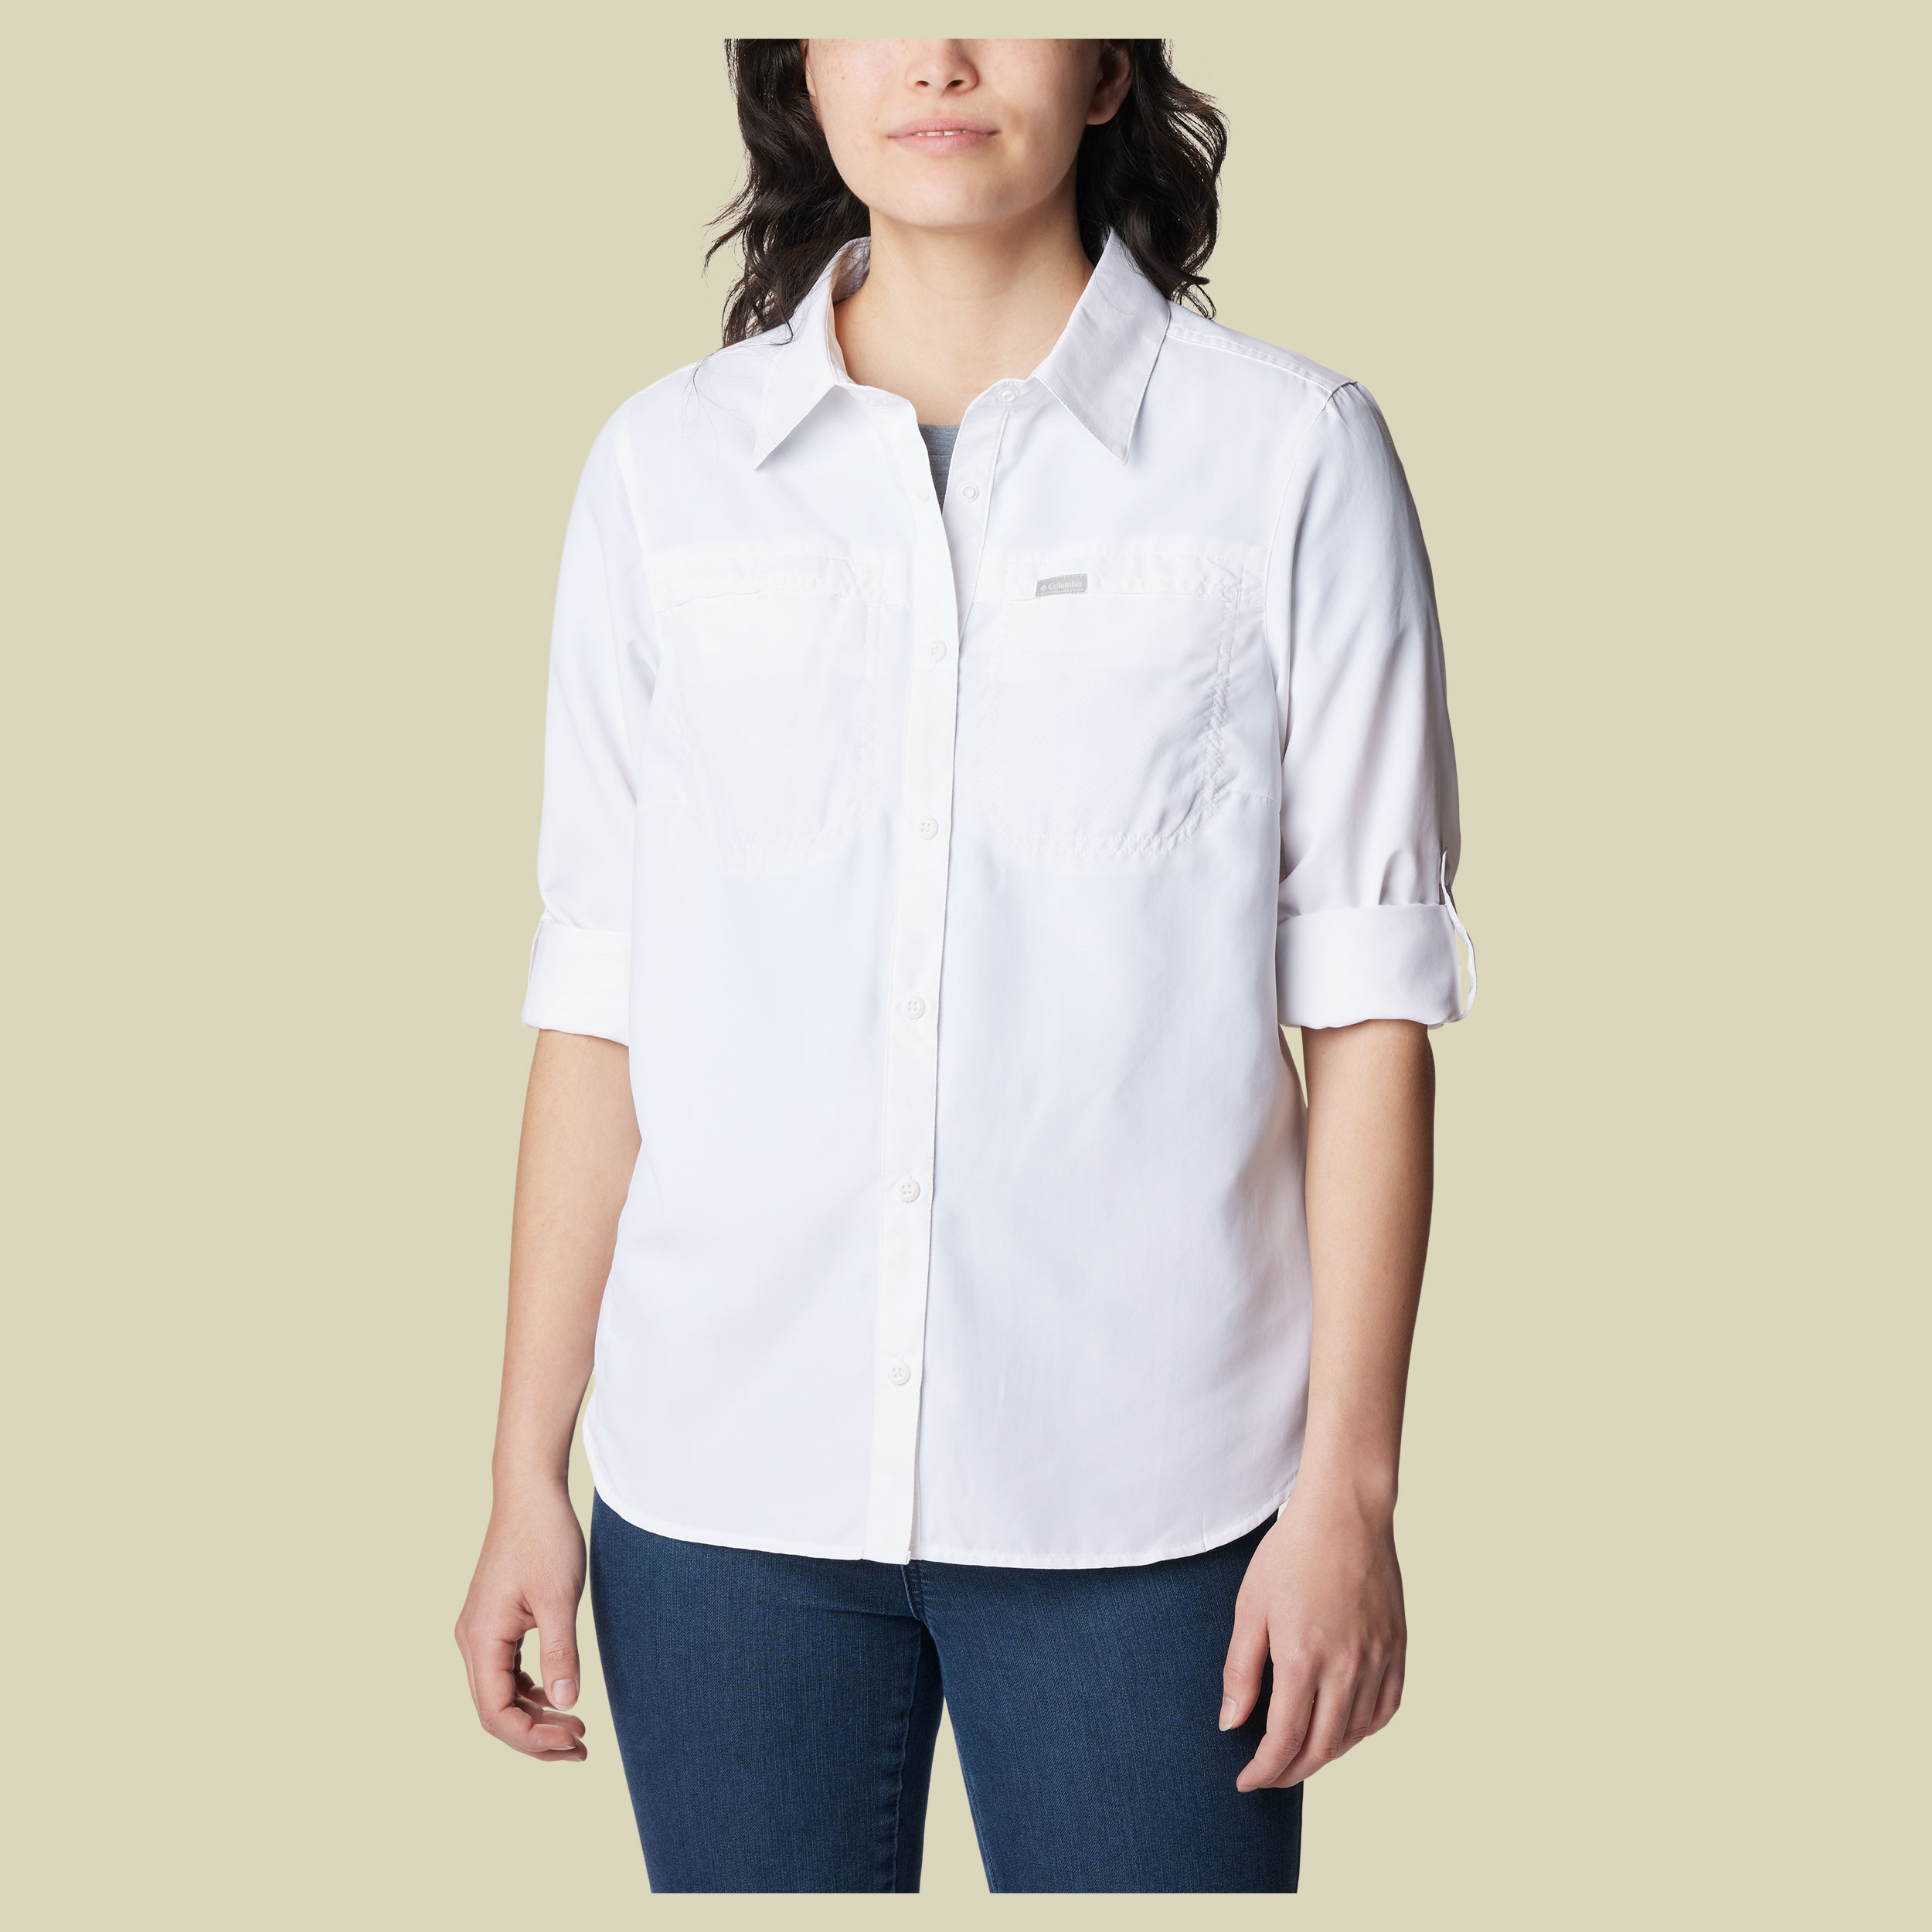 Silver Ridge 3.0 EUR Long Sleeve Shirt Women